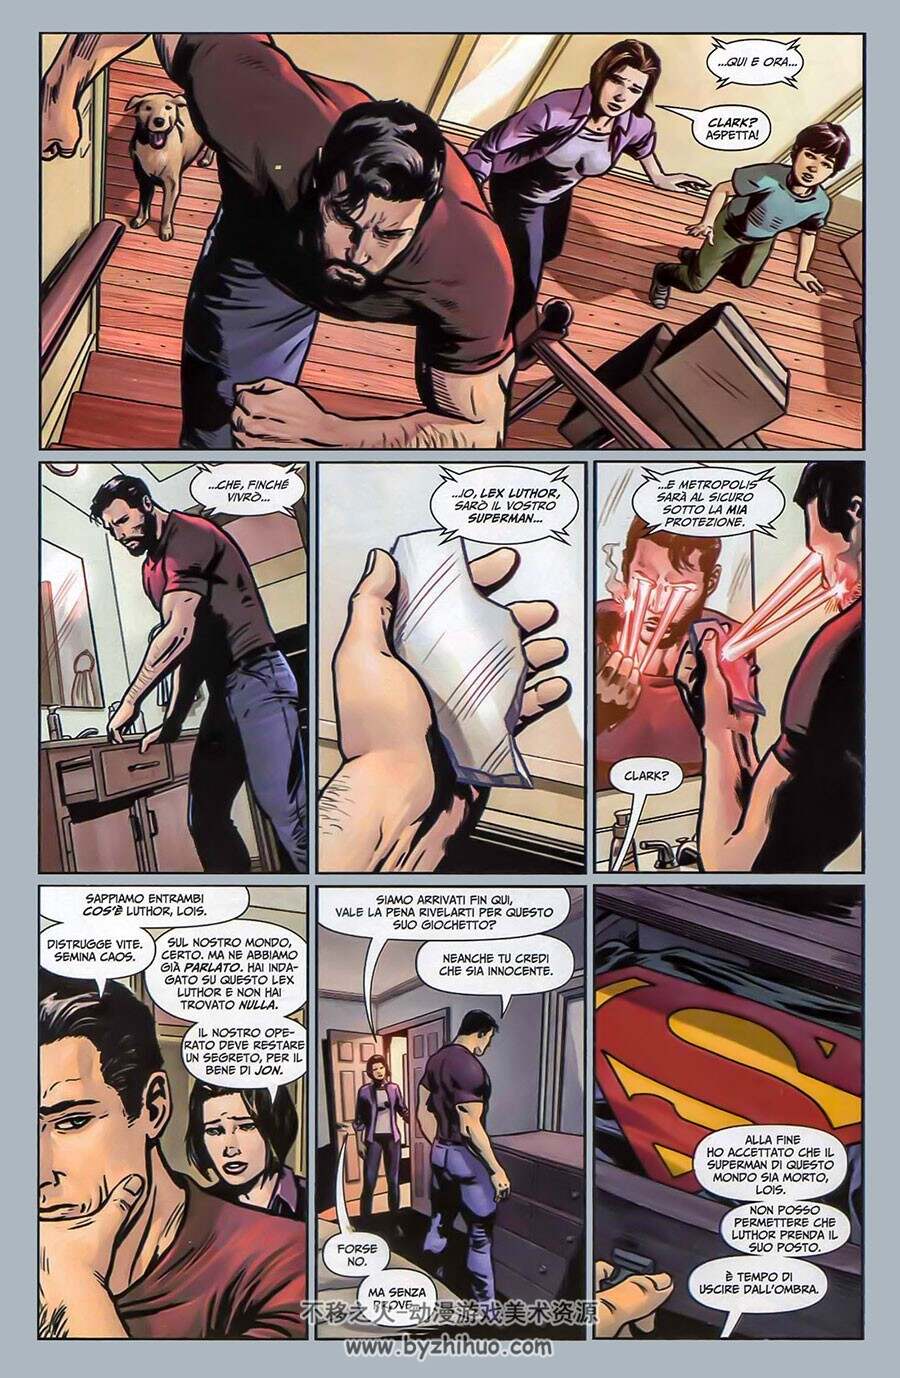 Superman Rinascita 第1册 意大利语美国DC漫画公司超人漫画下载